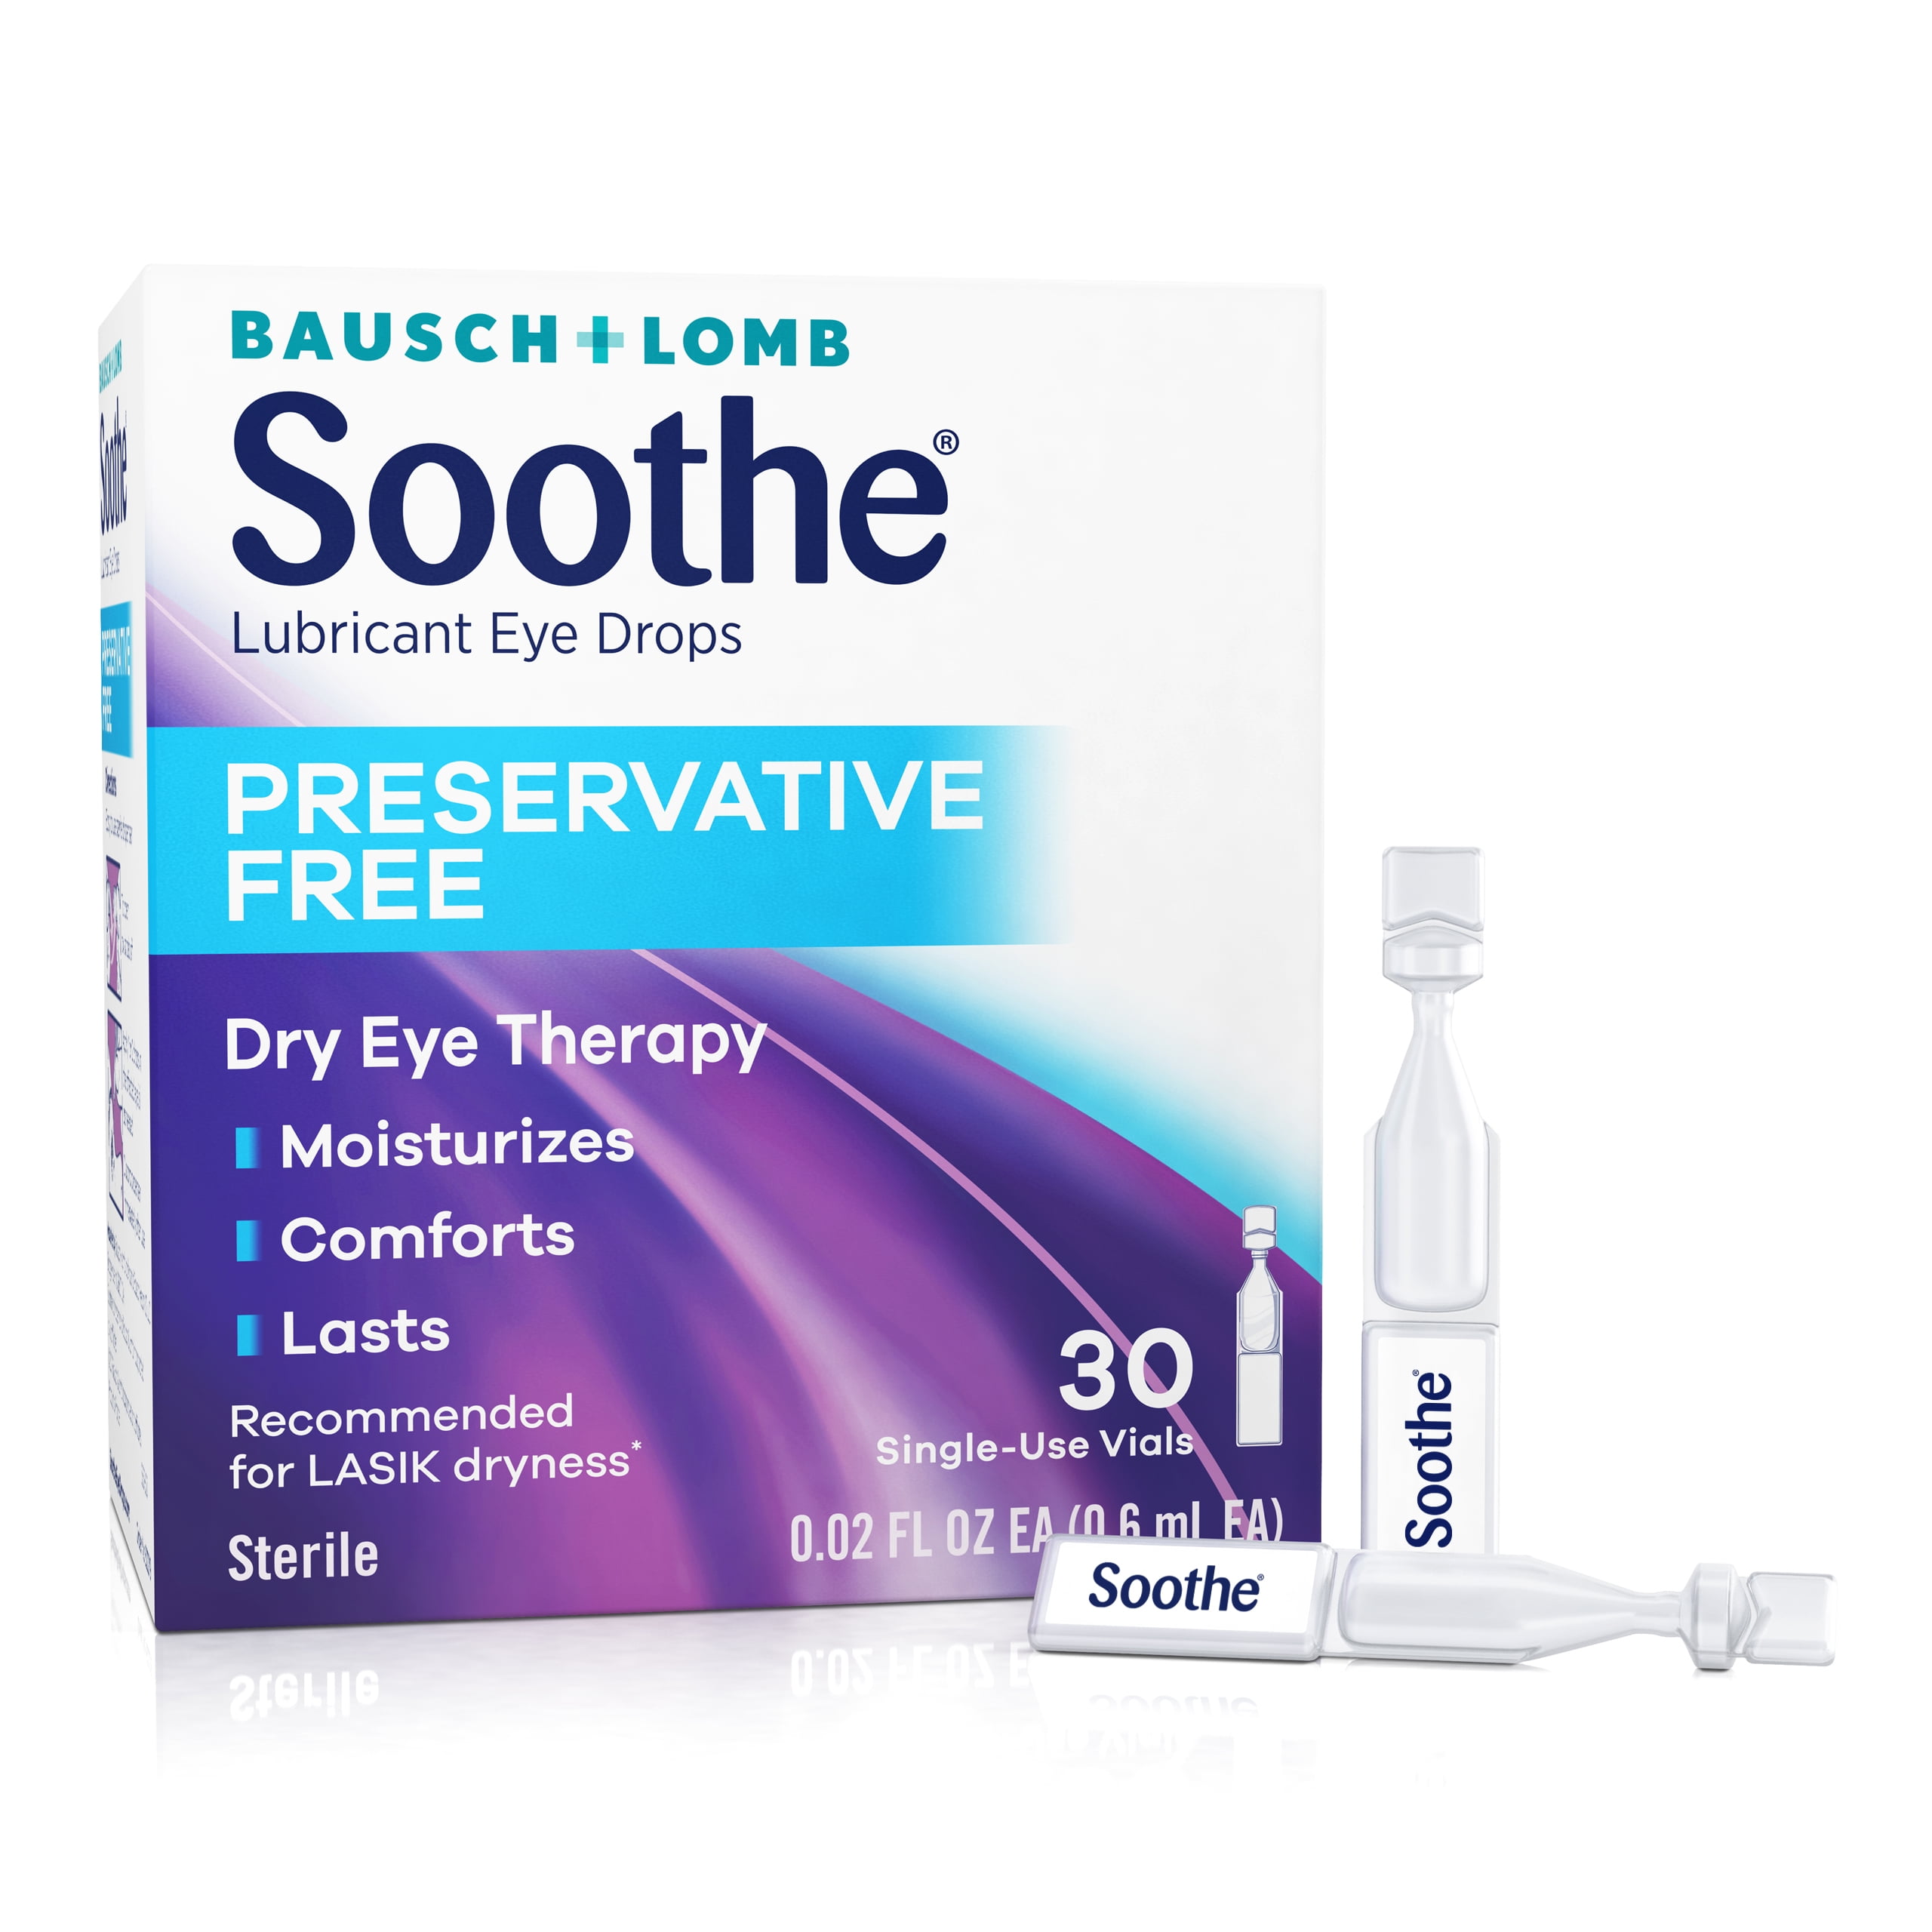 Soothe  Preservative Free Eye Drops for Dry Eyes, Lubricating Eye Dropsfrom Bausch + Lomb, 0.02 FL OZ EA (0.6 mL EA) (30-Count)